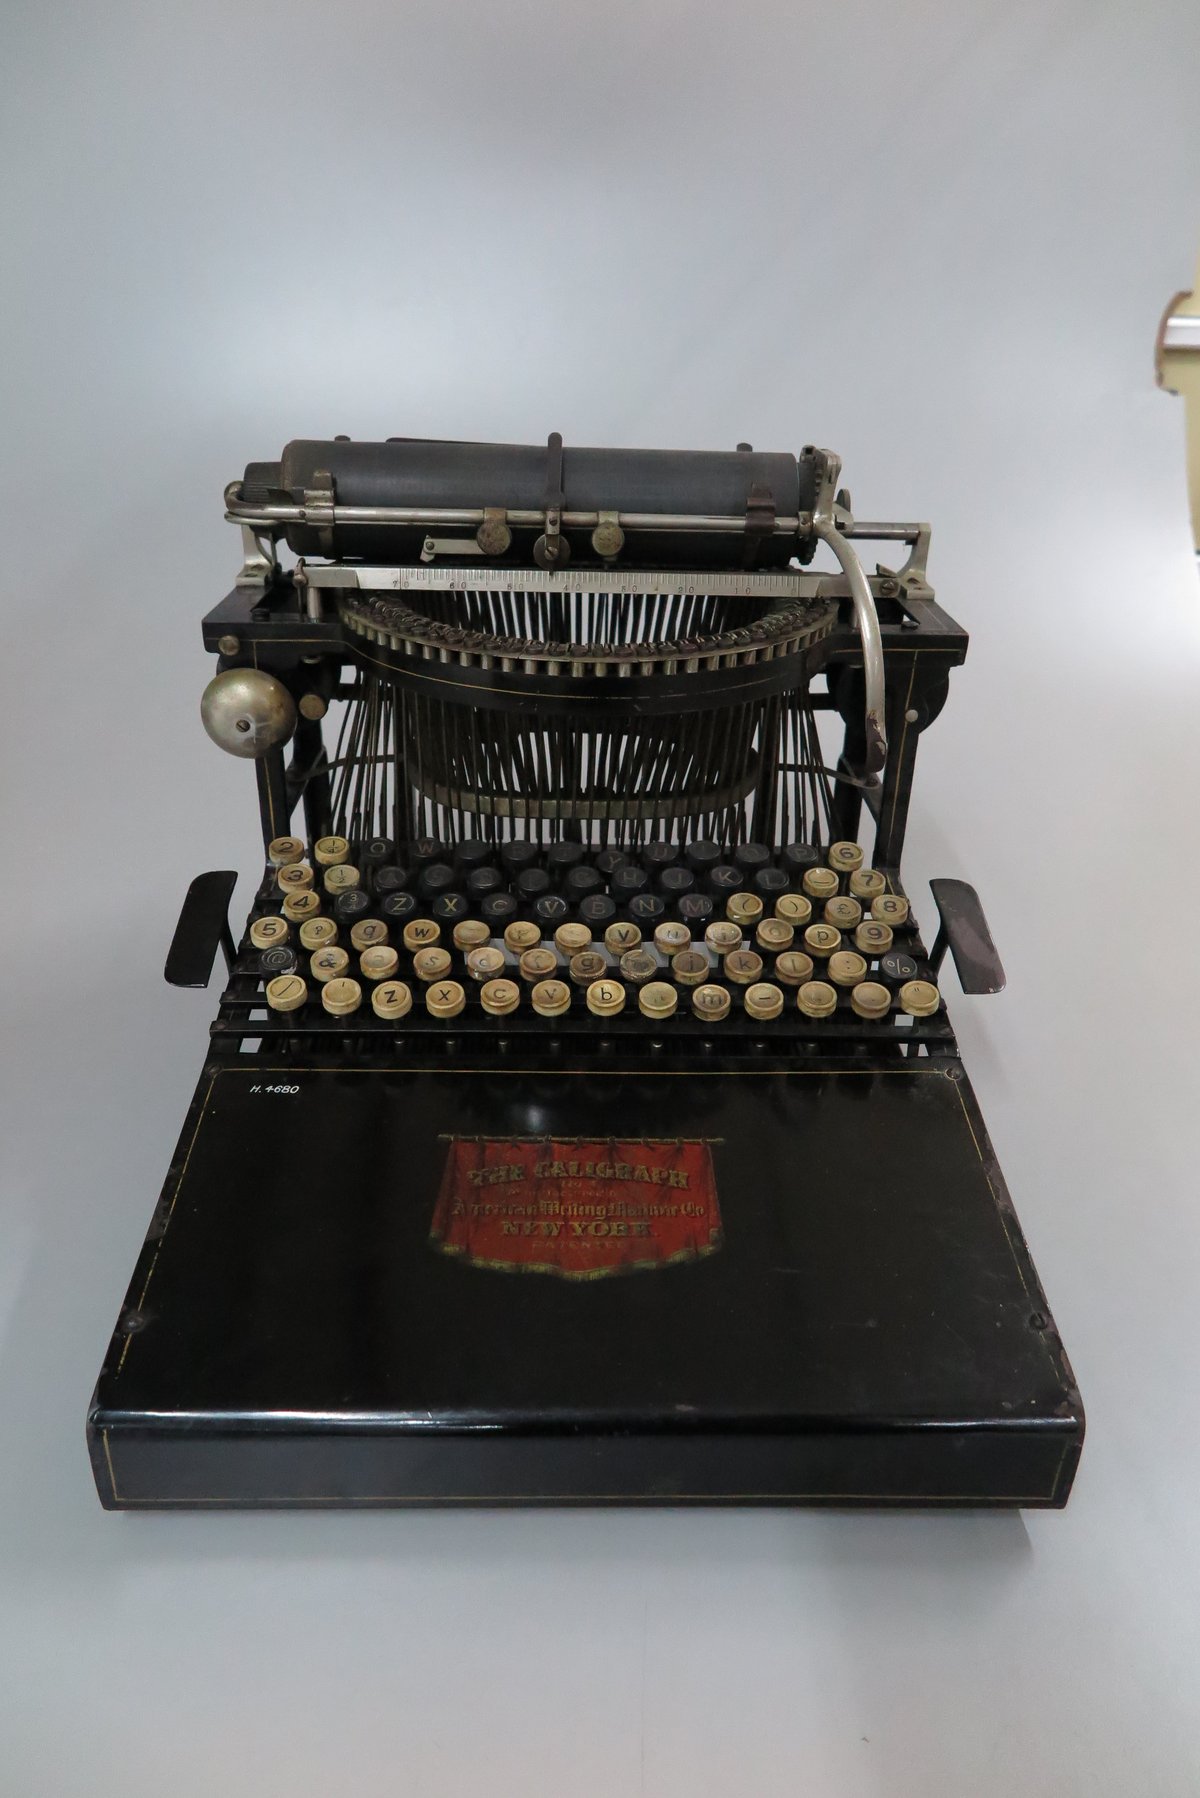 American Writing Machine Co. Century 10 – myoldtypewriter